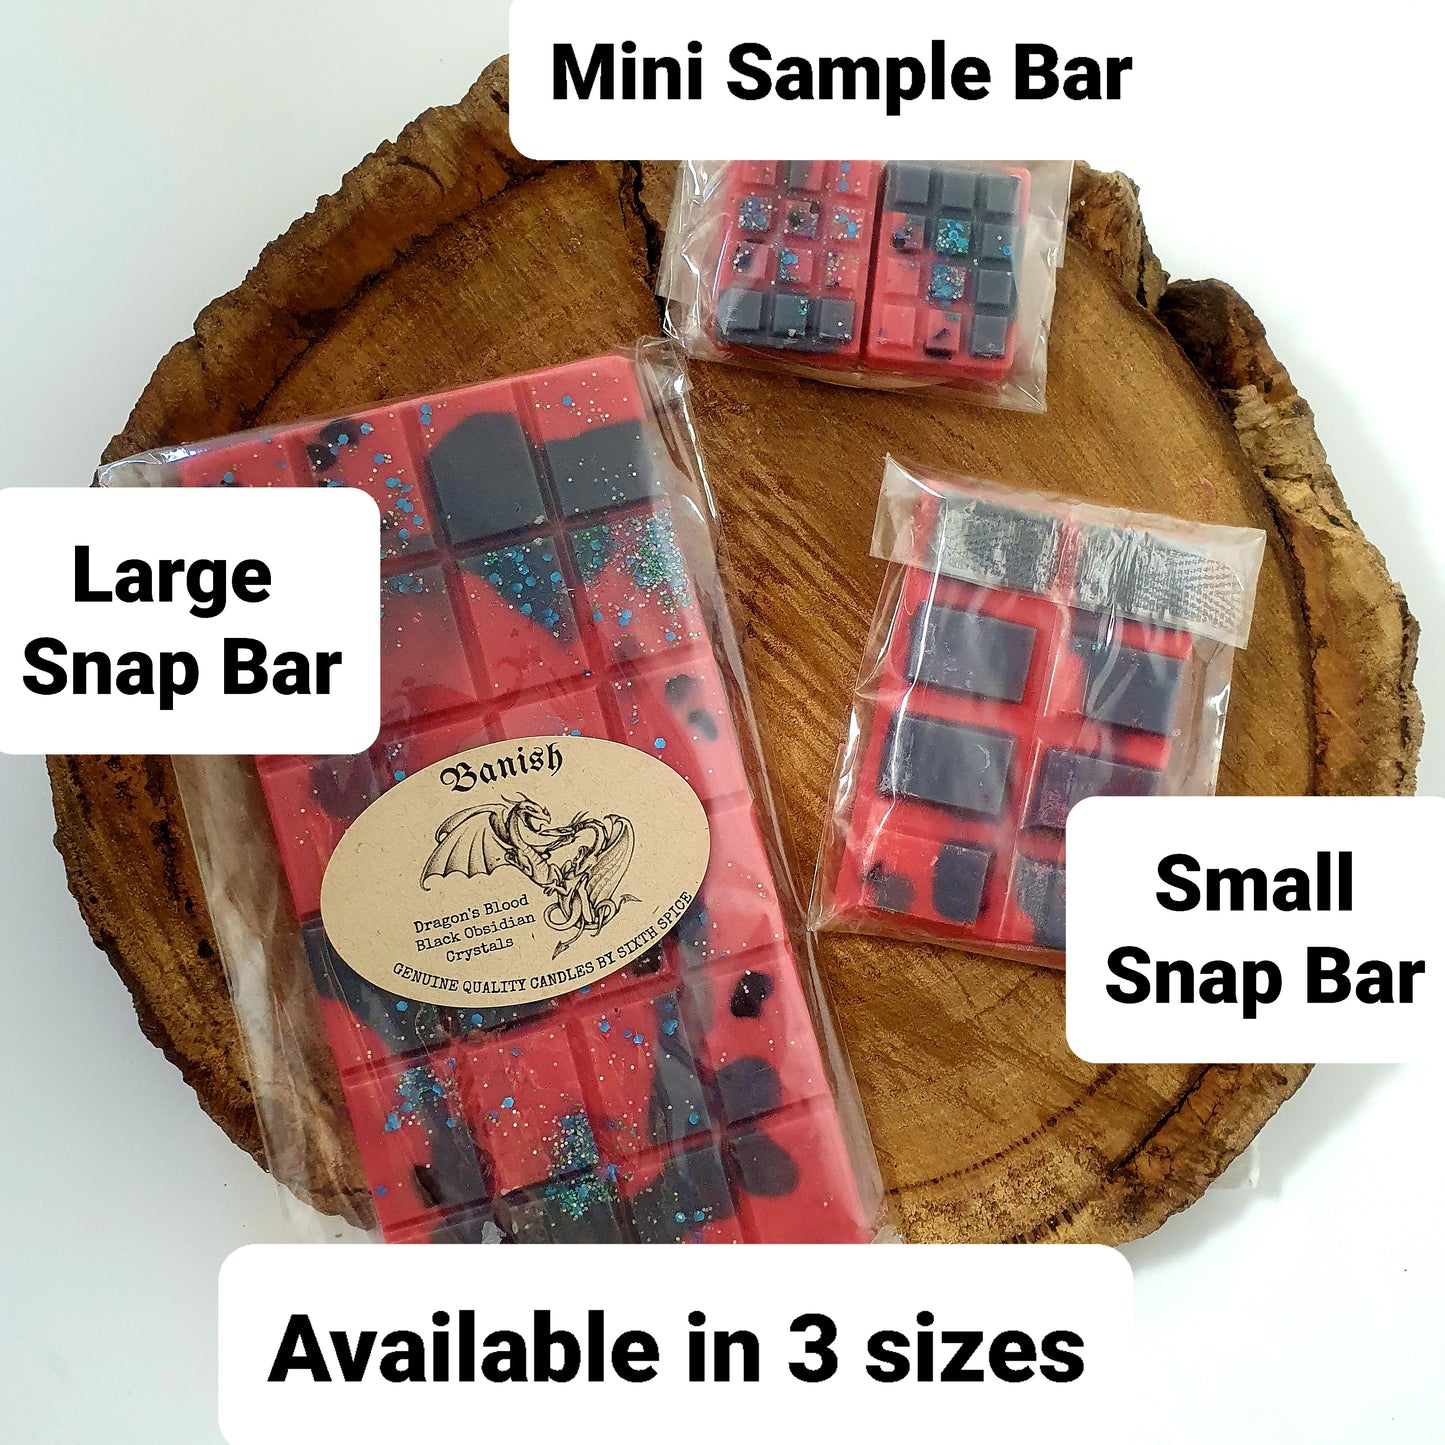 Banish - Snap Bar Melts